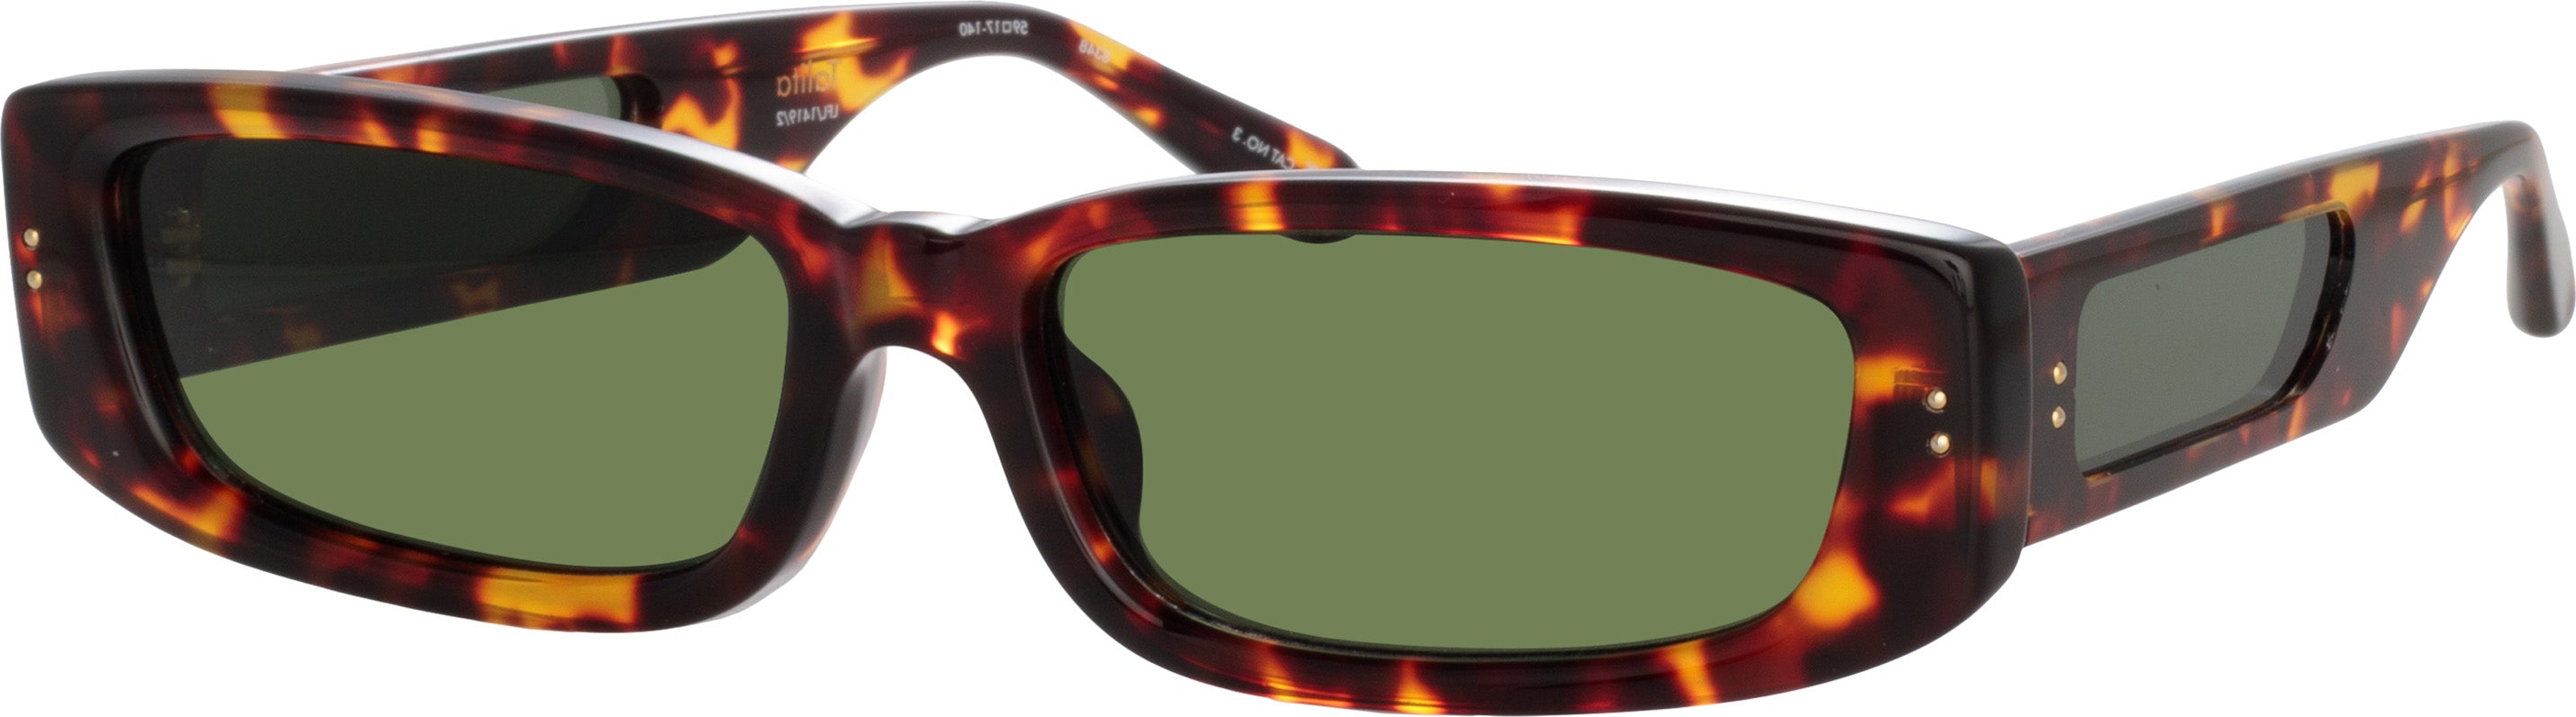 Color_LFL1419C2SUN - Talita Rectangular Sunglasses in Tortoiseshell